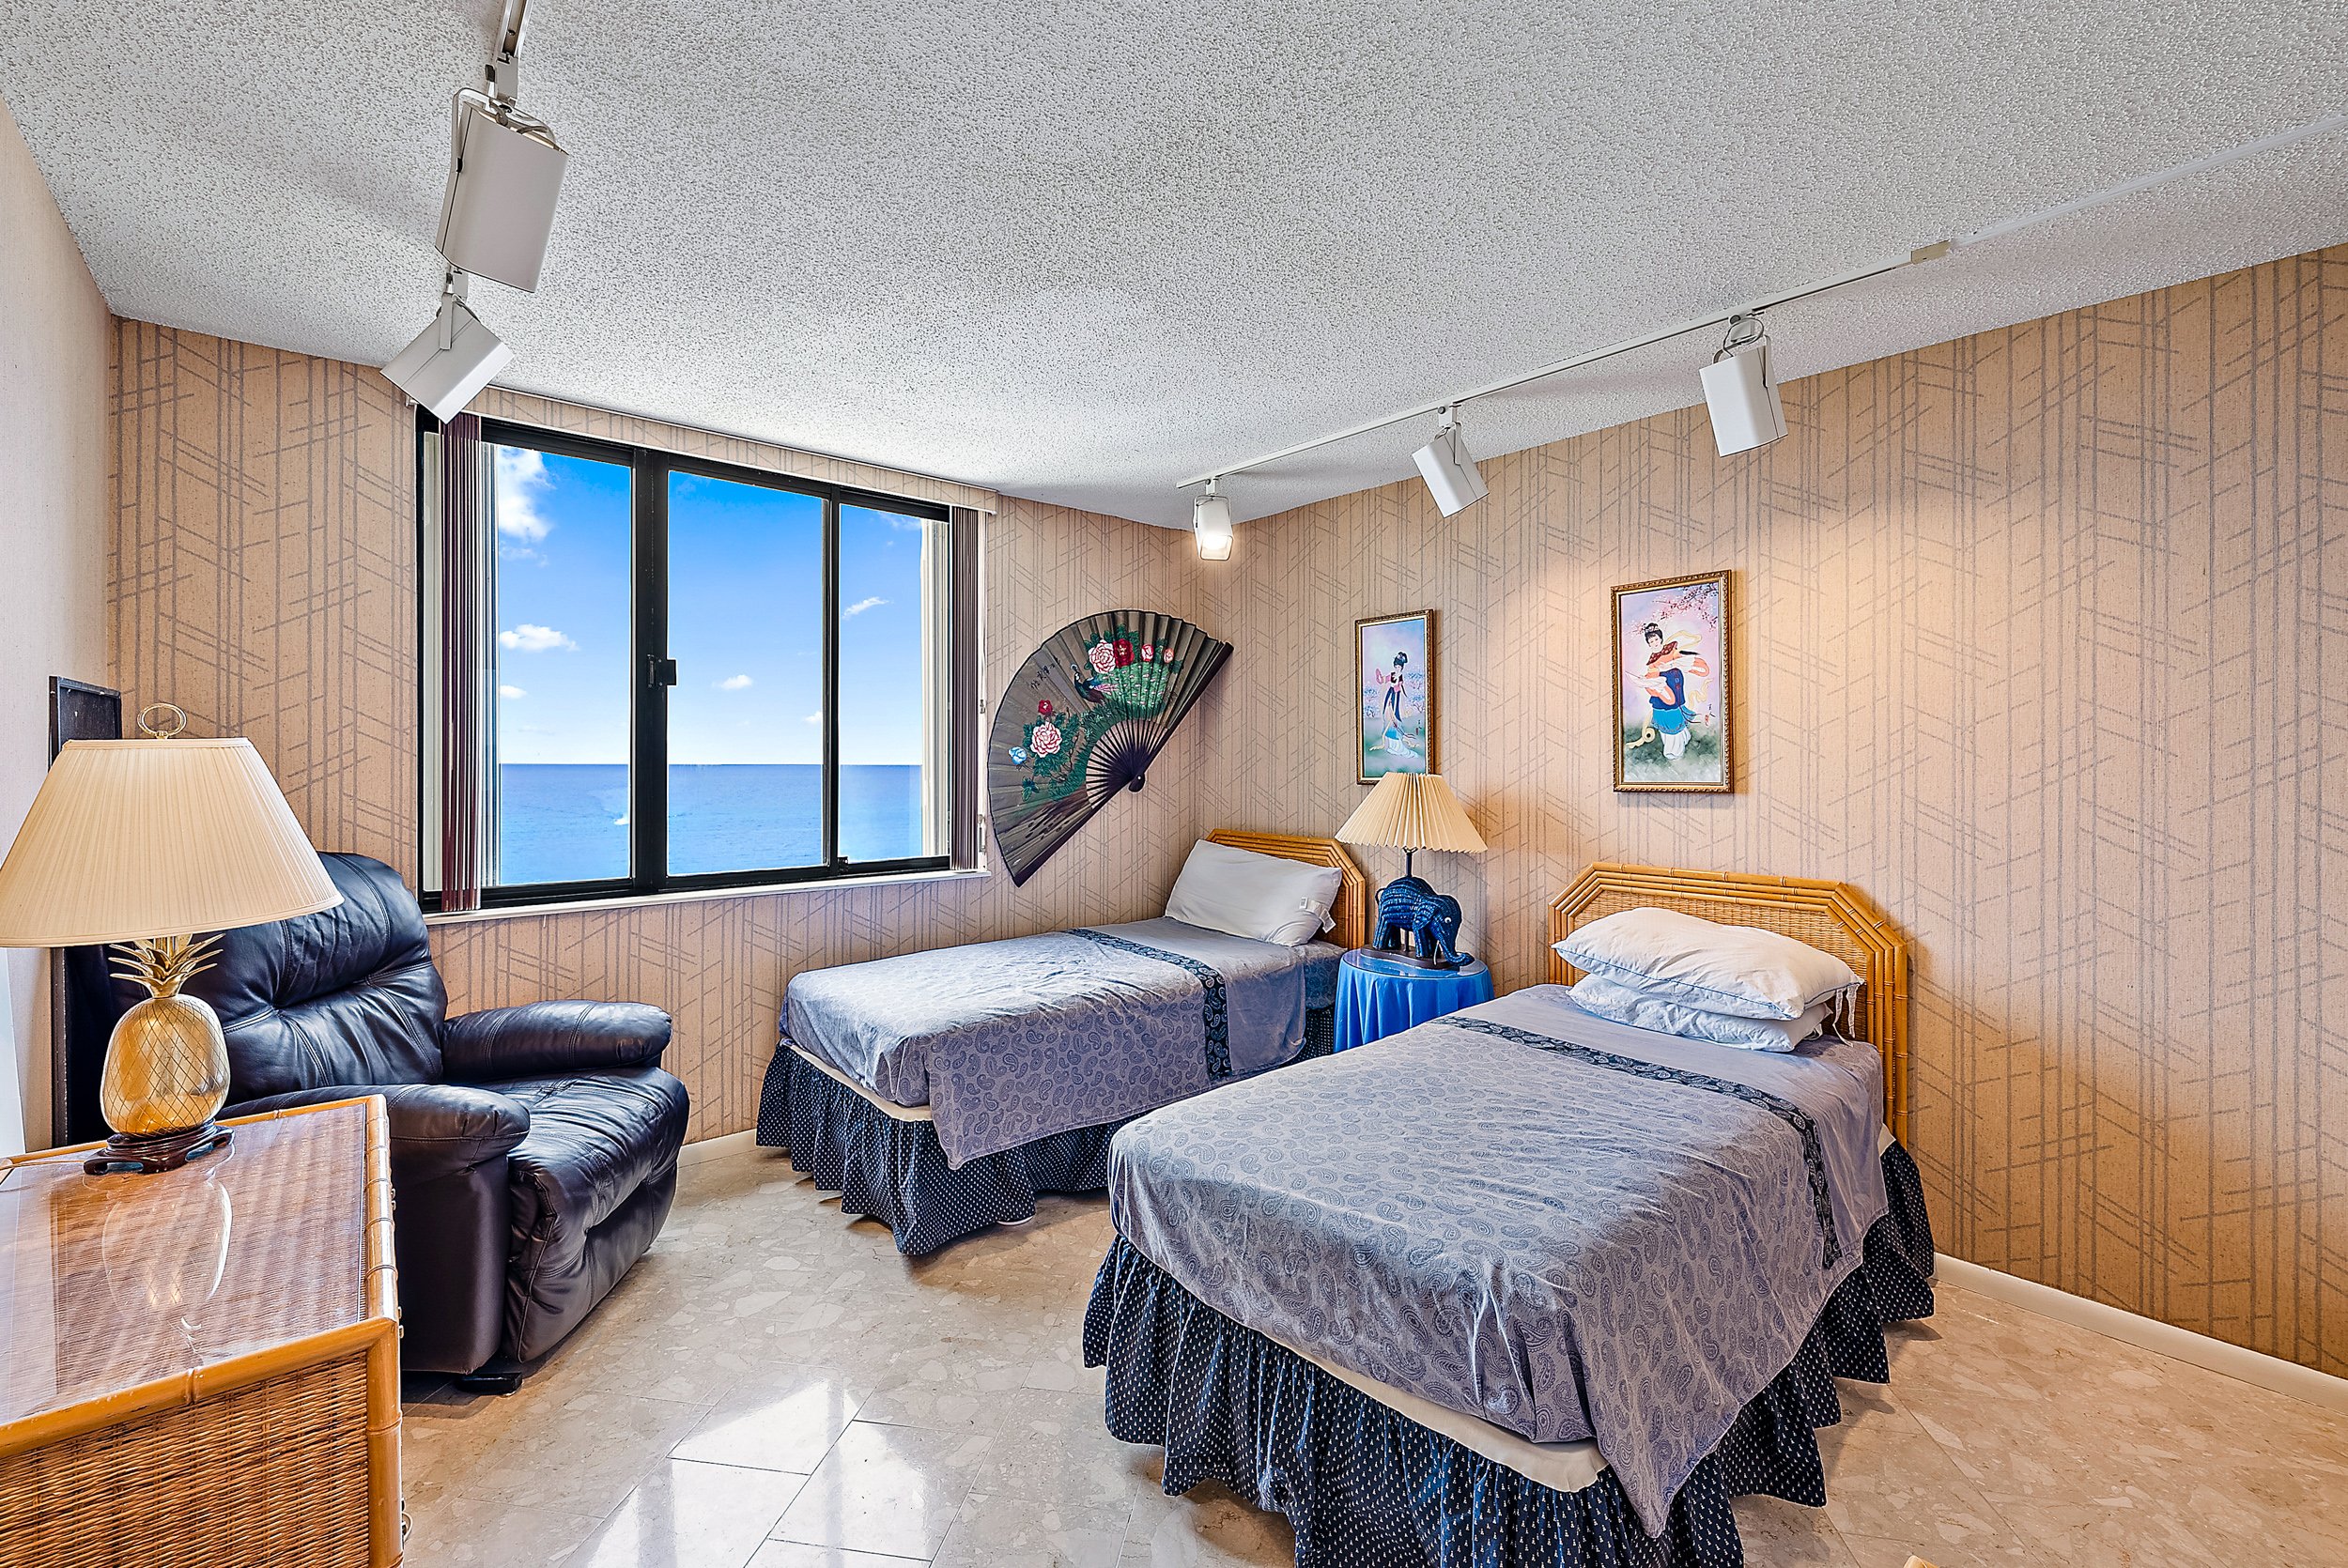 Second bedroom with ocean view